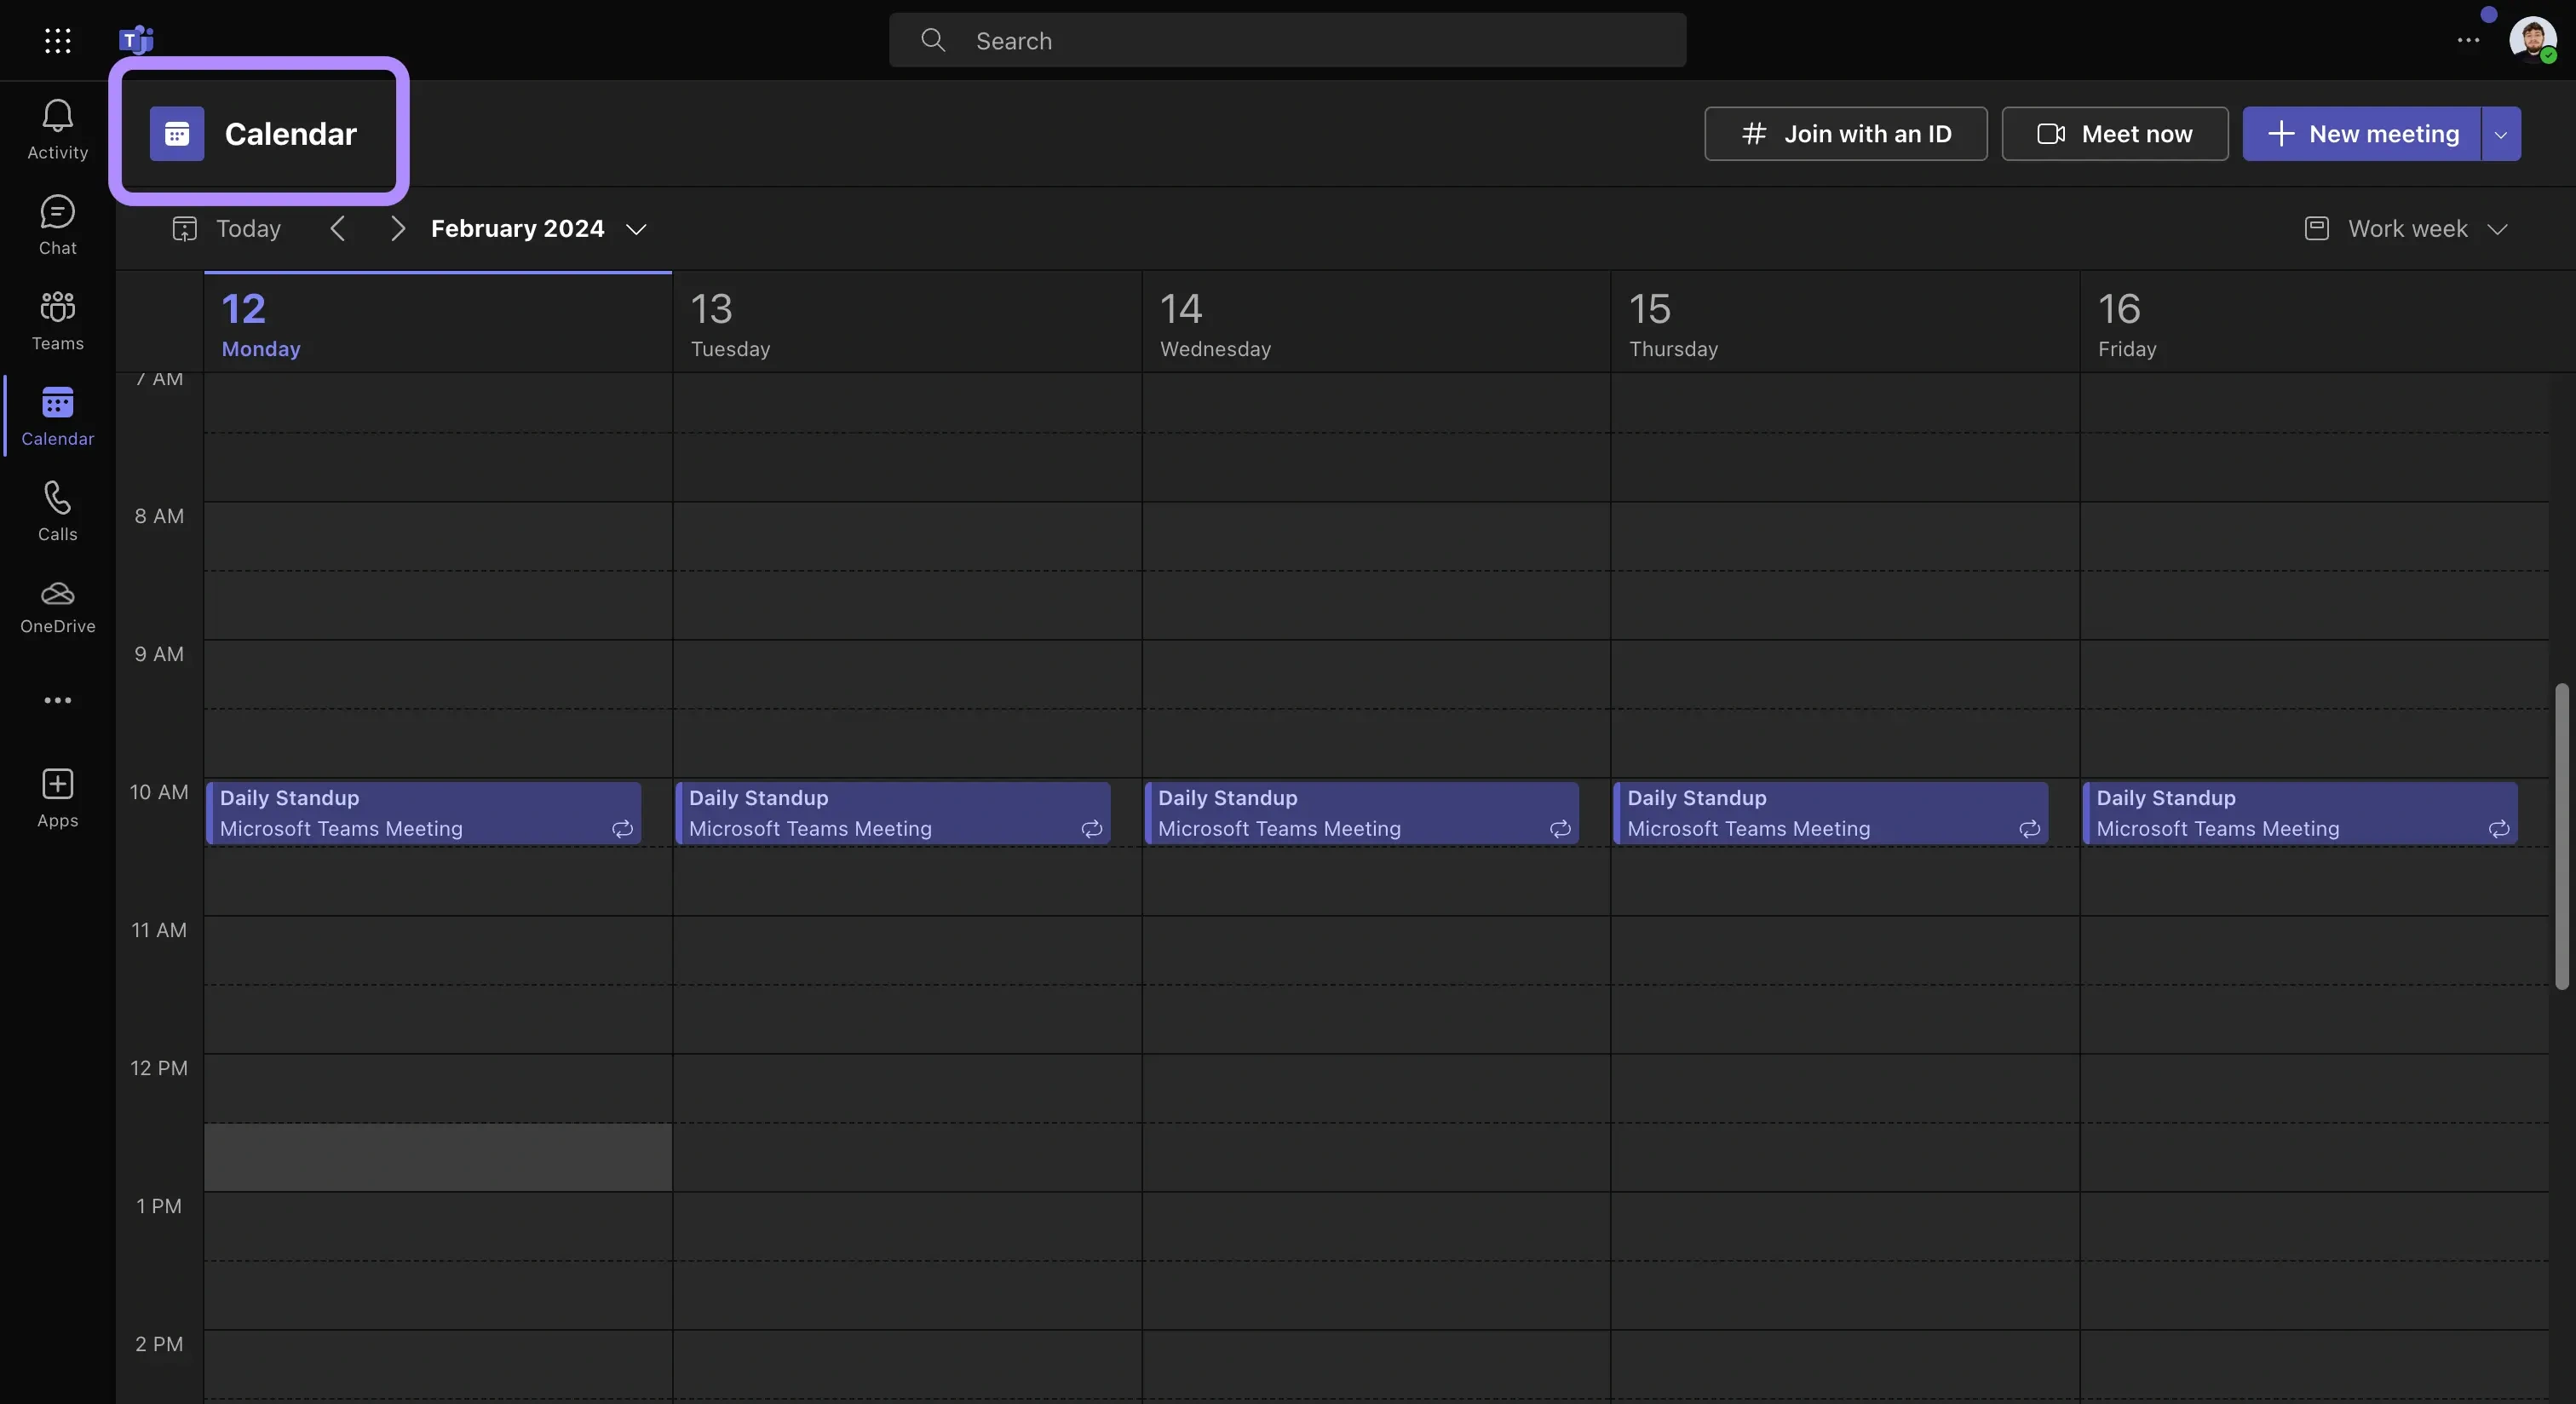 Microsoft Teams Calendar UI